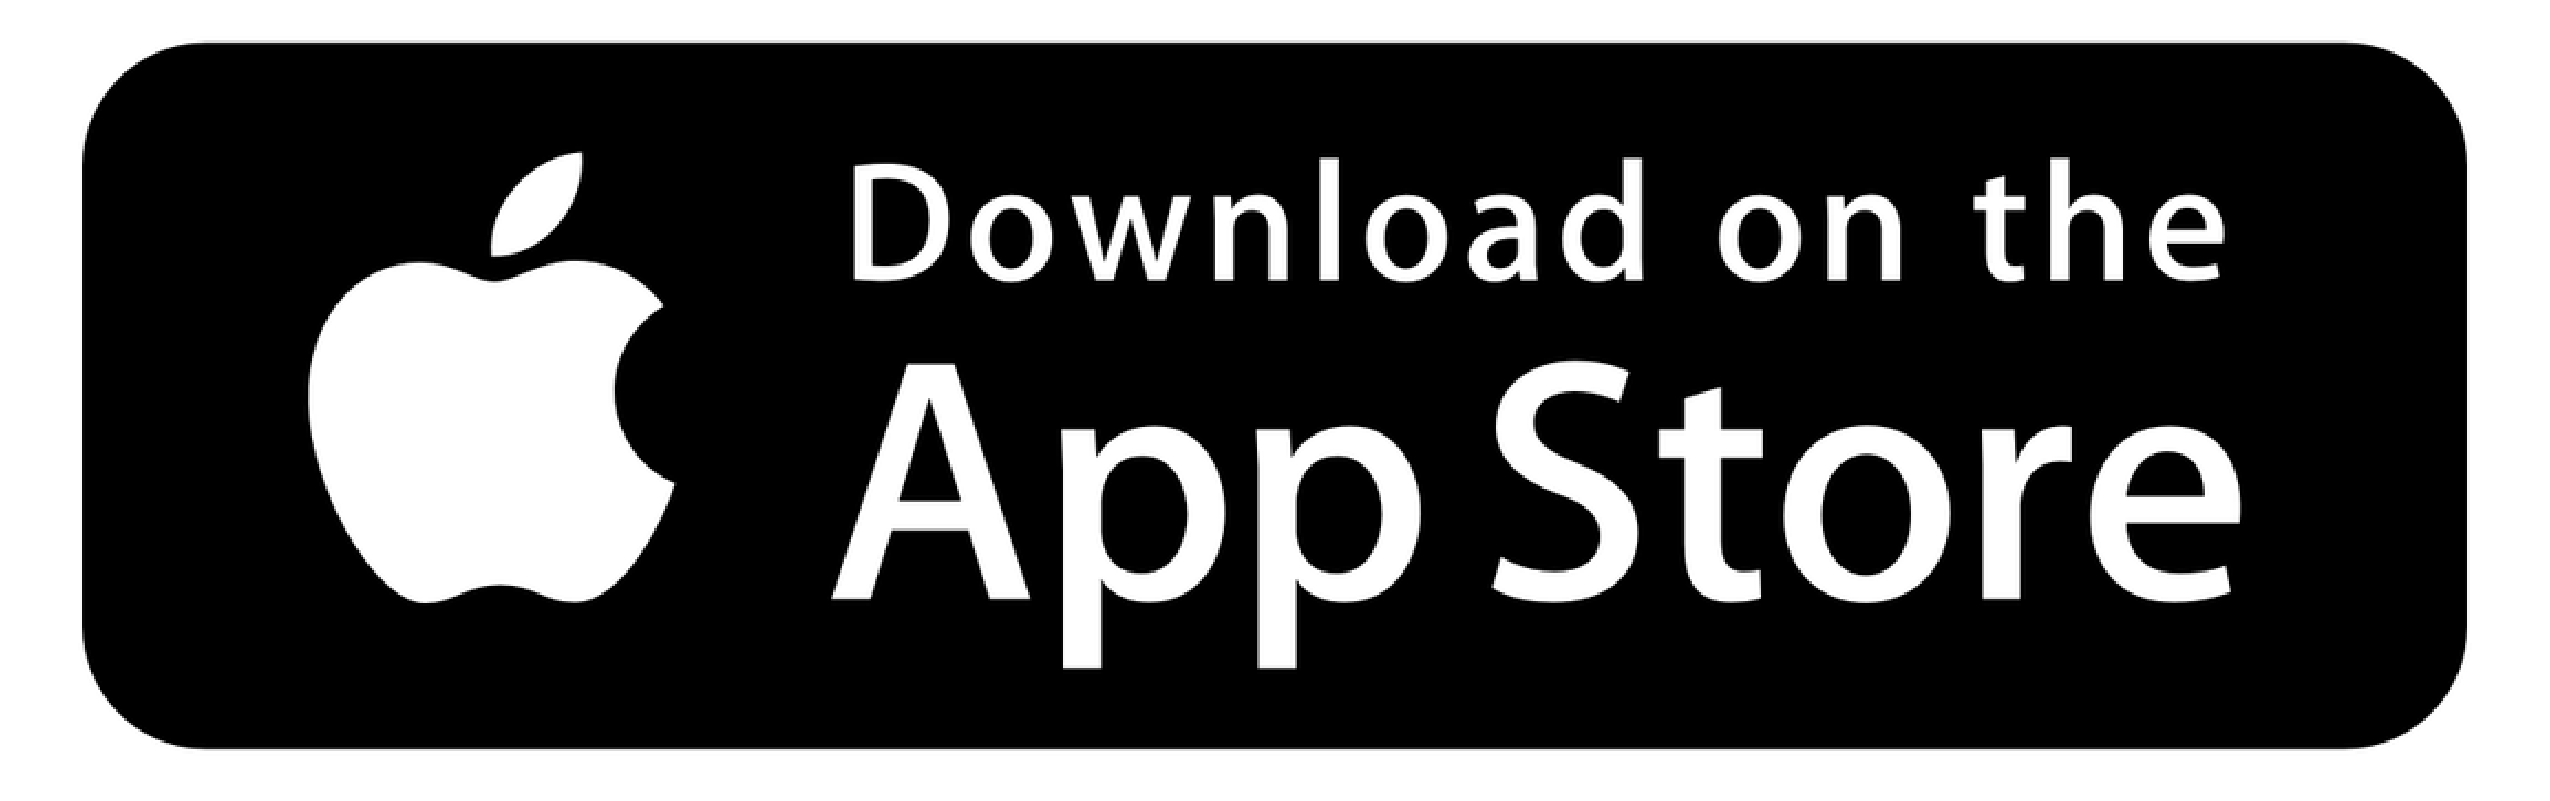 Route 66 Casino mobile app on iTunes